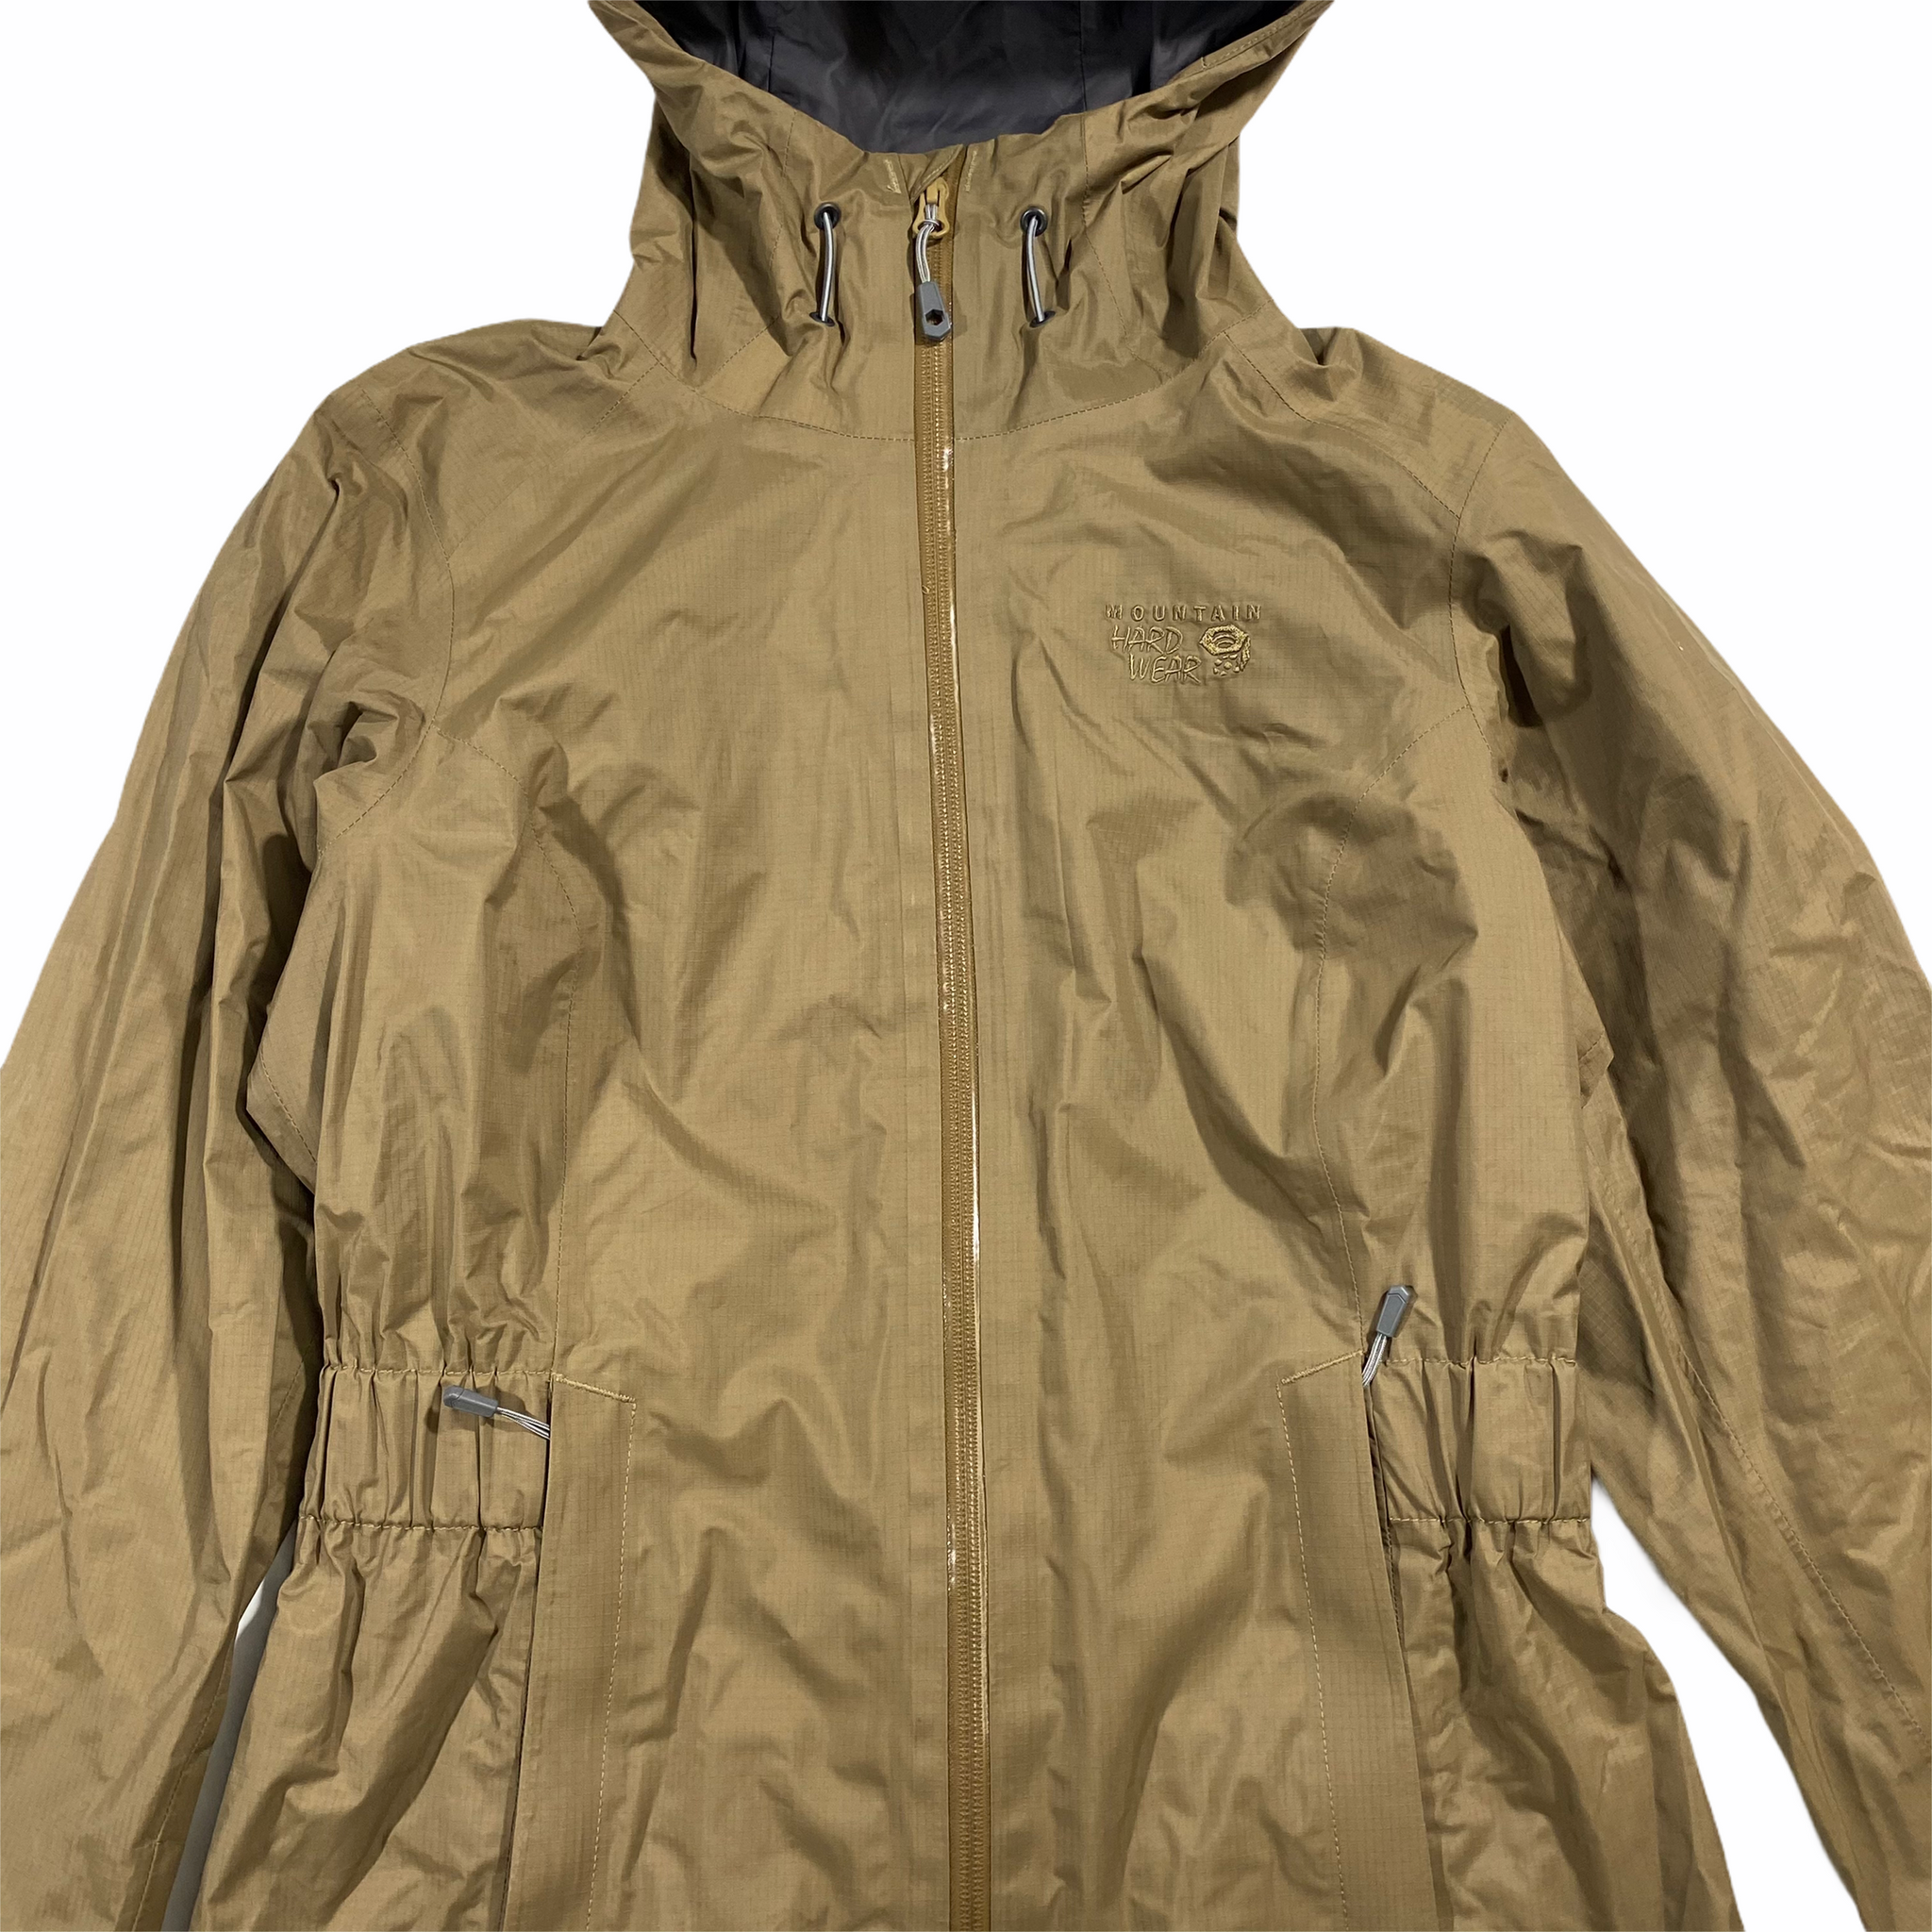 Mountain hardwear light jacket/shell. XS